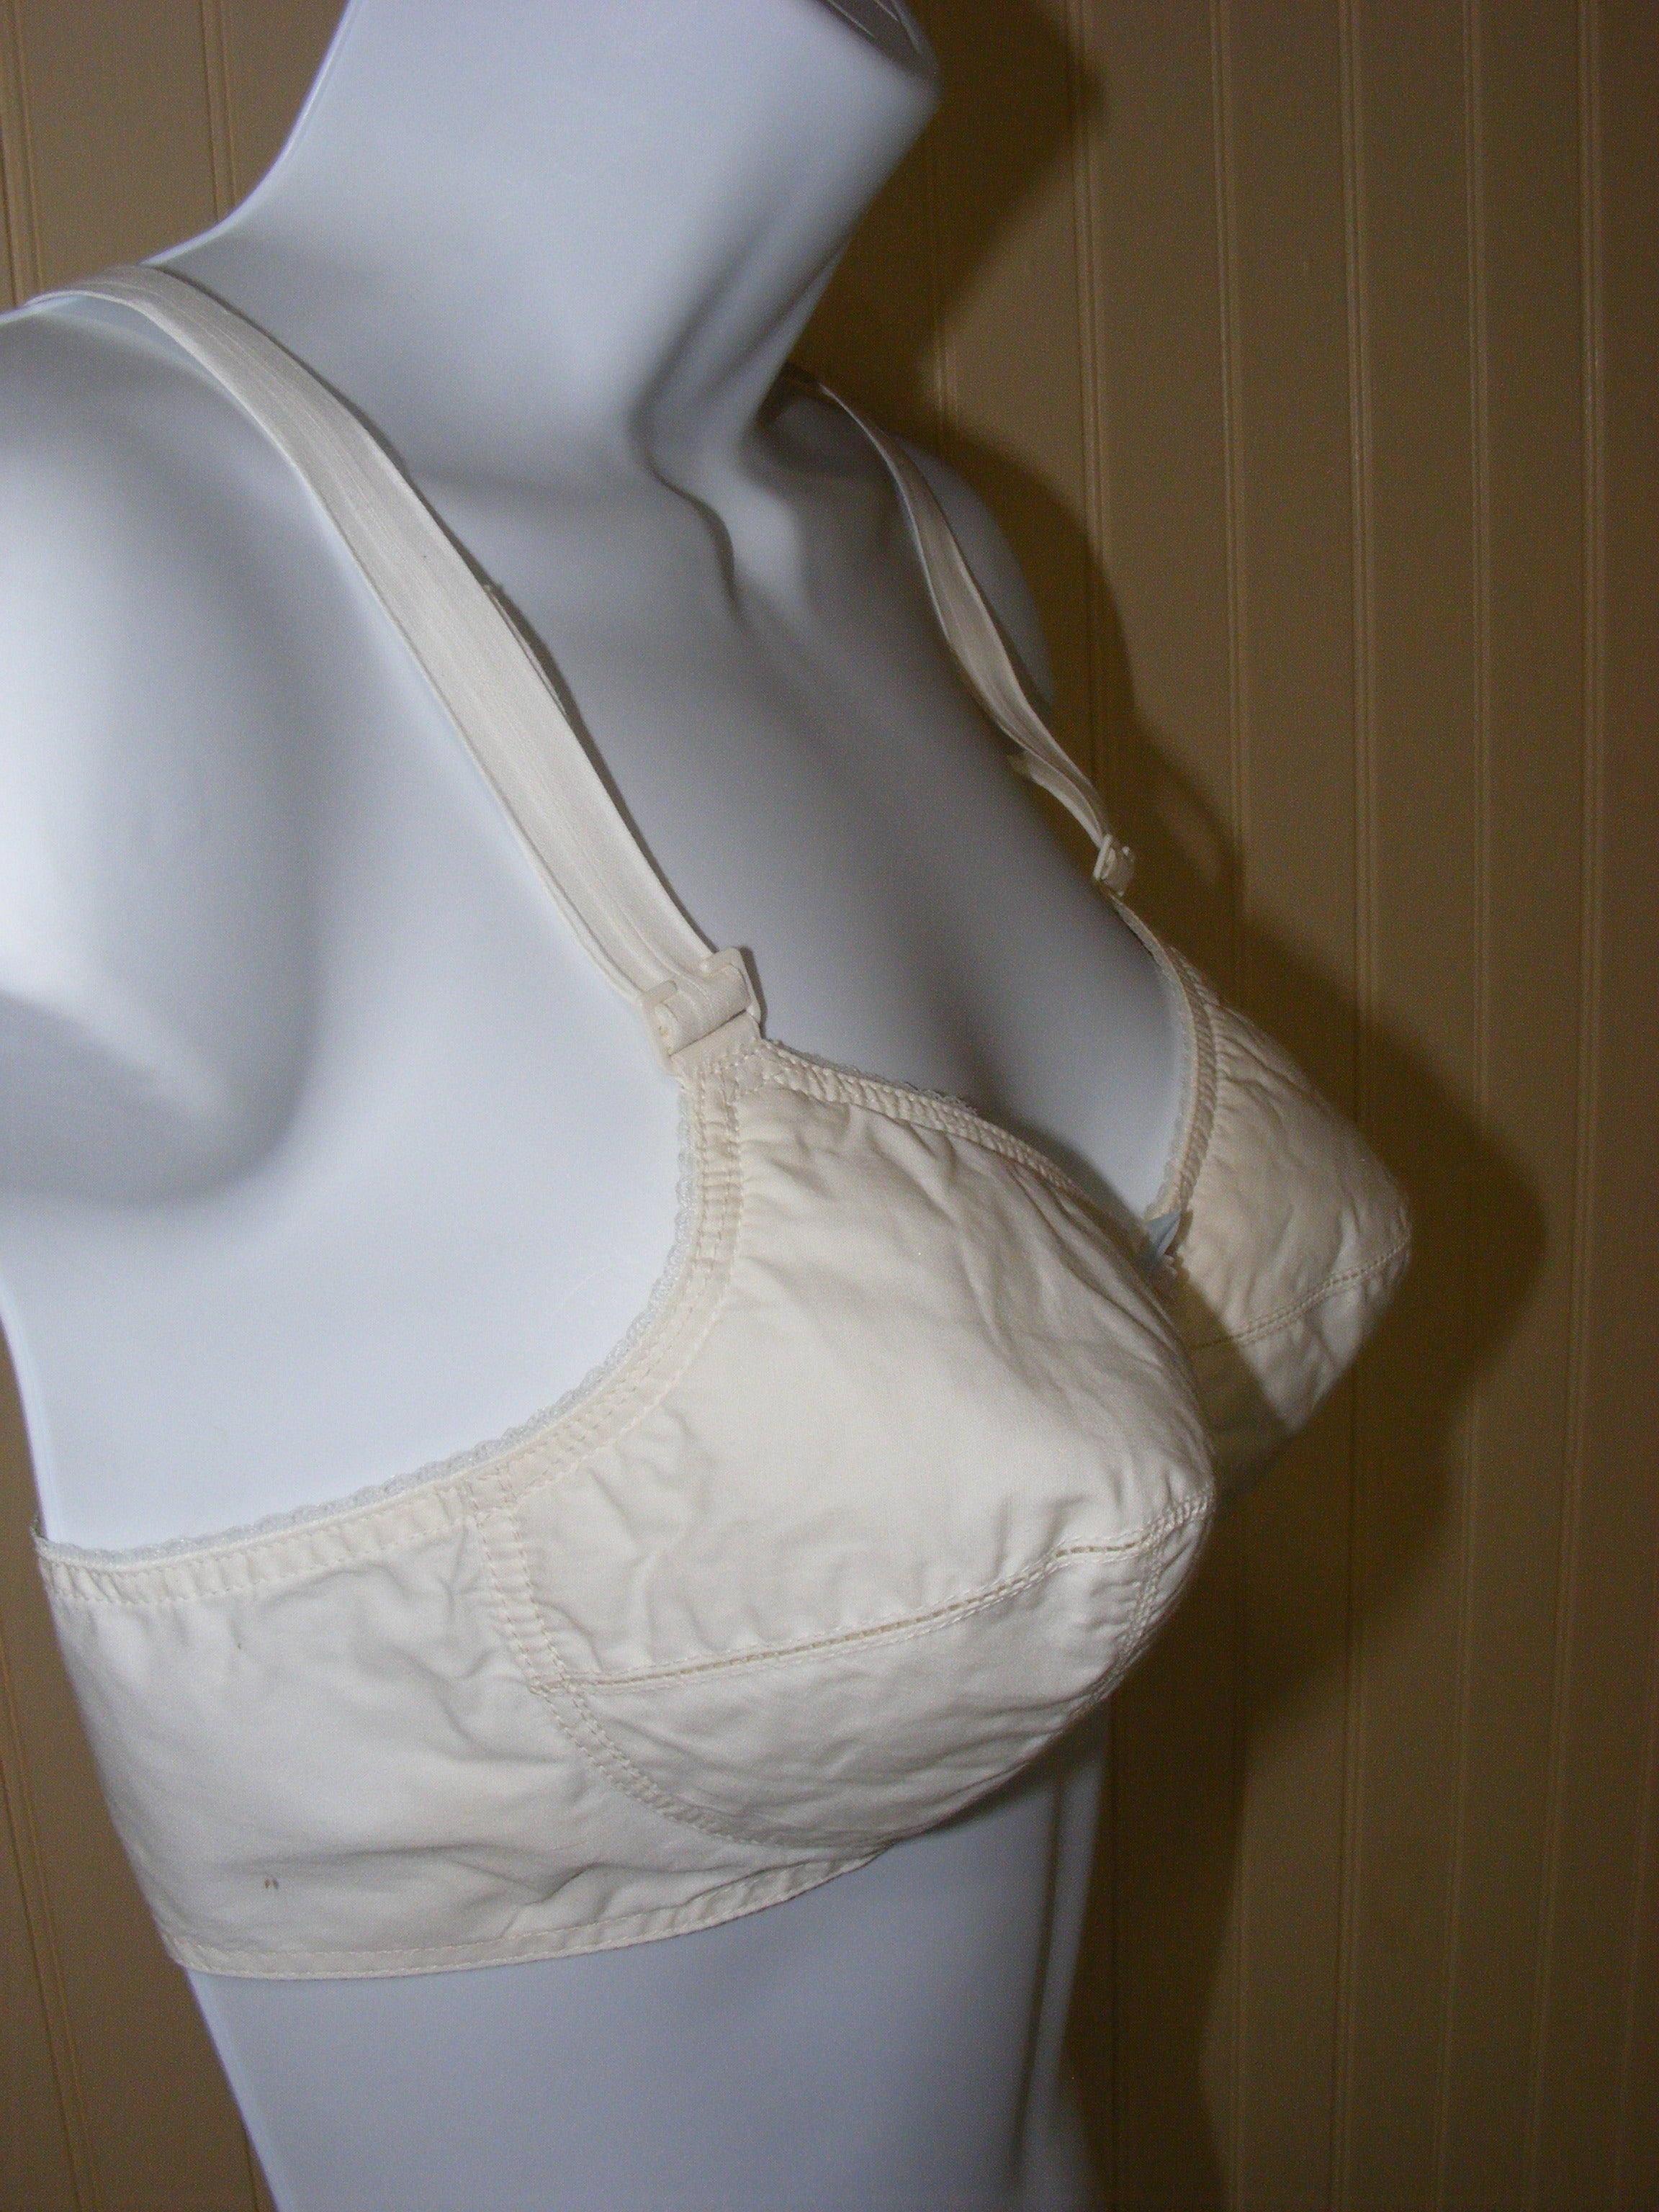 PaperDesingPS on X: Vintage BRA, white bra with lace 80s, bra